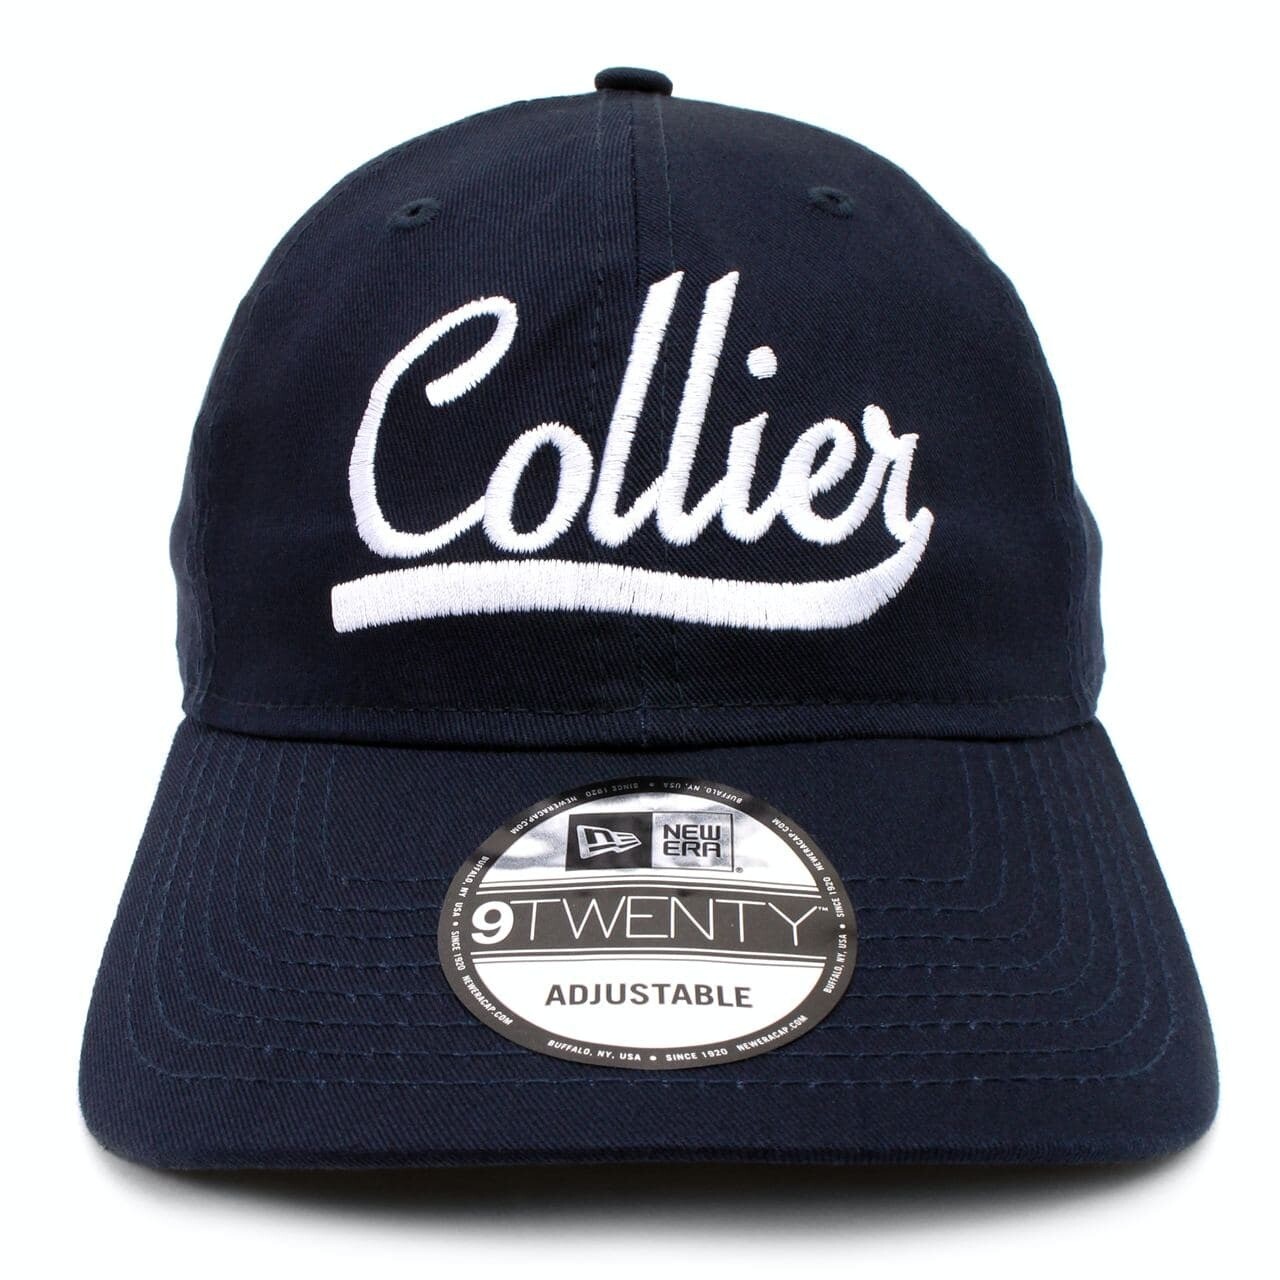 THE COLLIER CAP